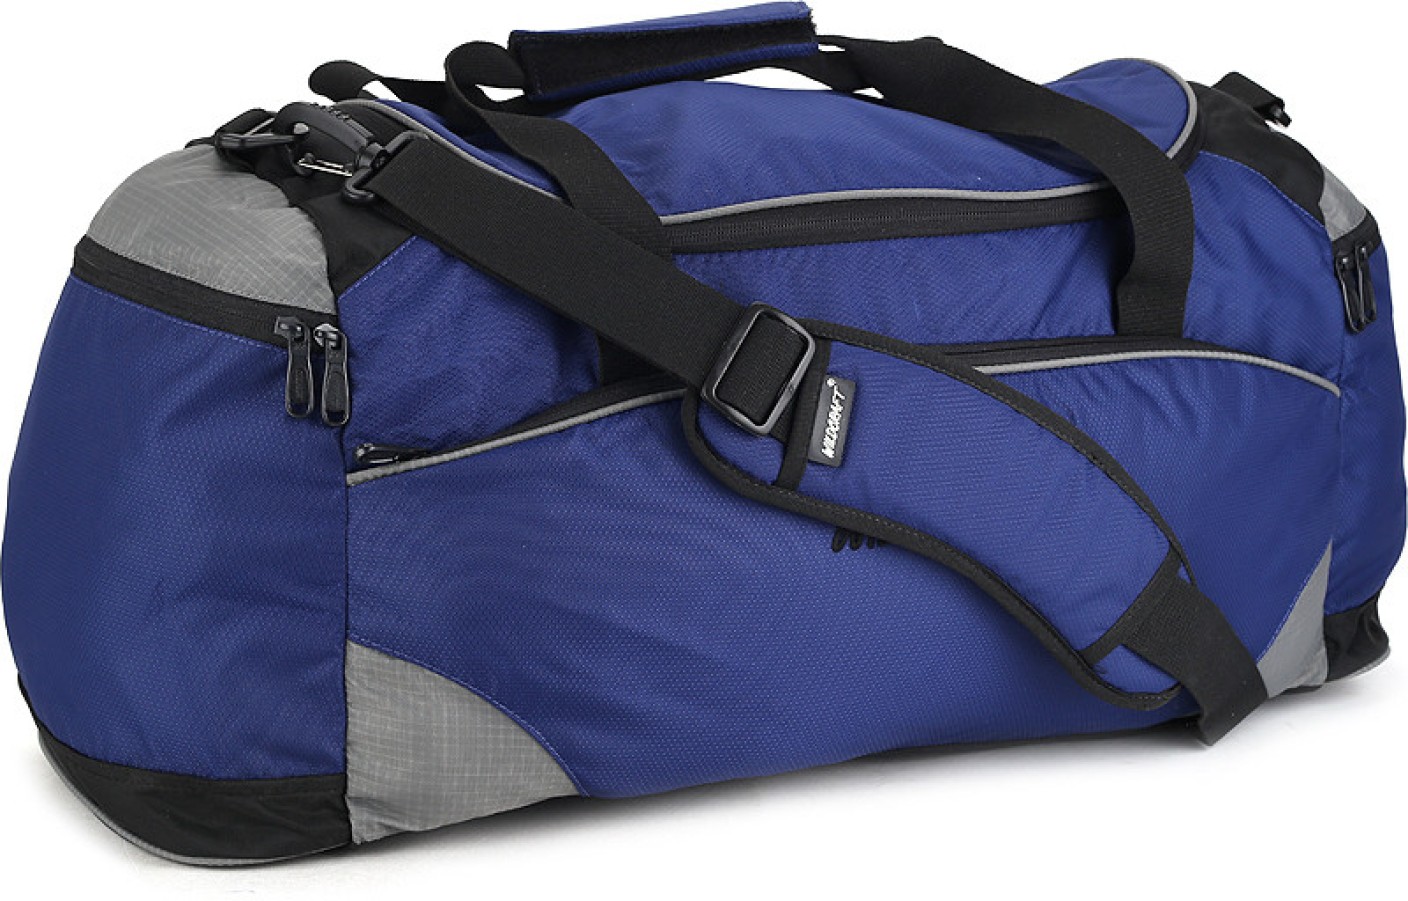 Wildcraft Aqua Small 24 inch/60 cm Travel Duffel Bag Blue - Price in India | 0